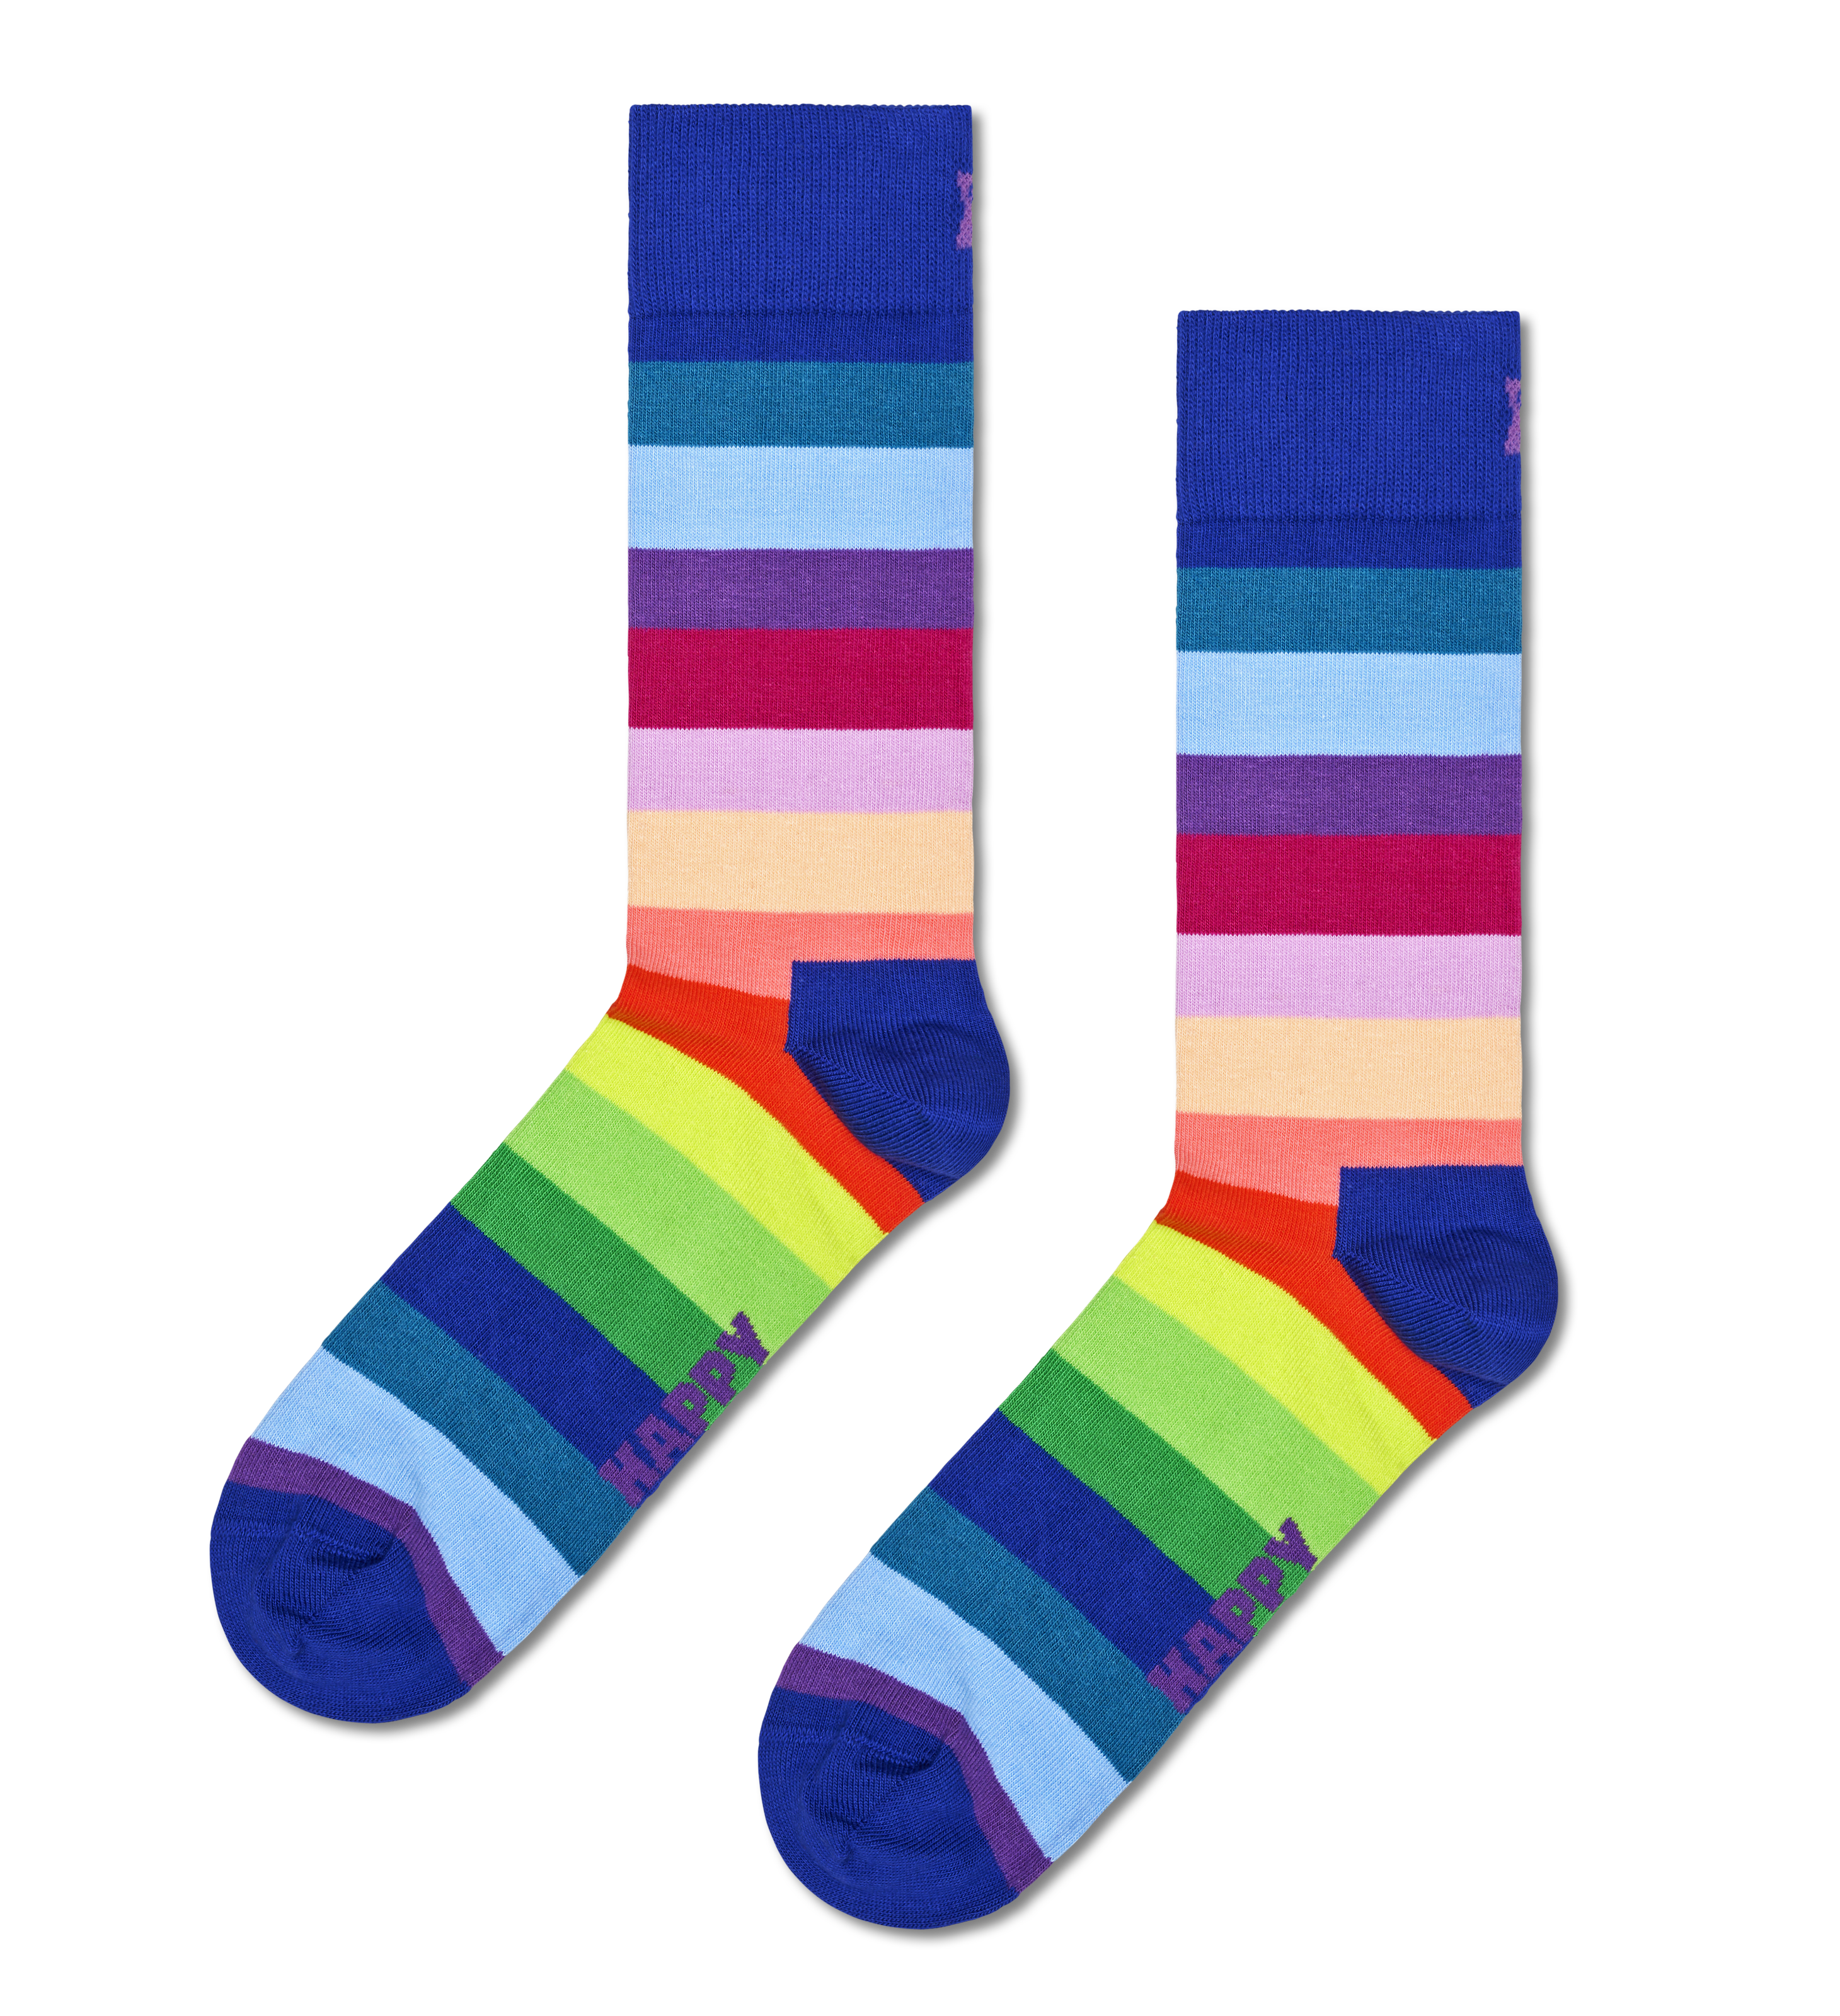 Funny, Fun and Cool Socks for Sock Lovers - Funatic